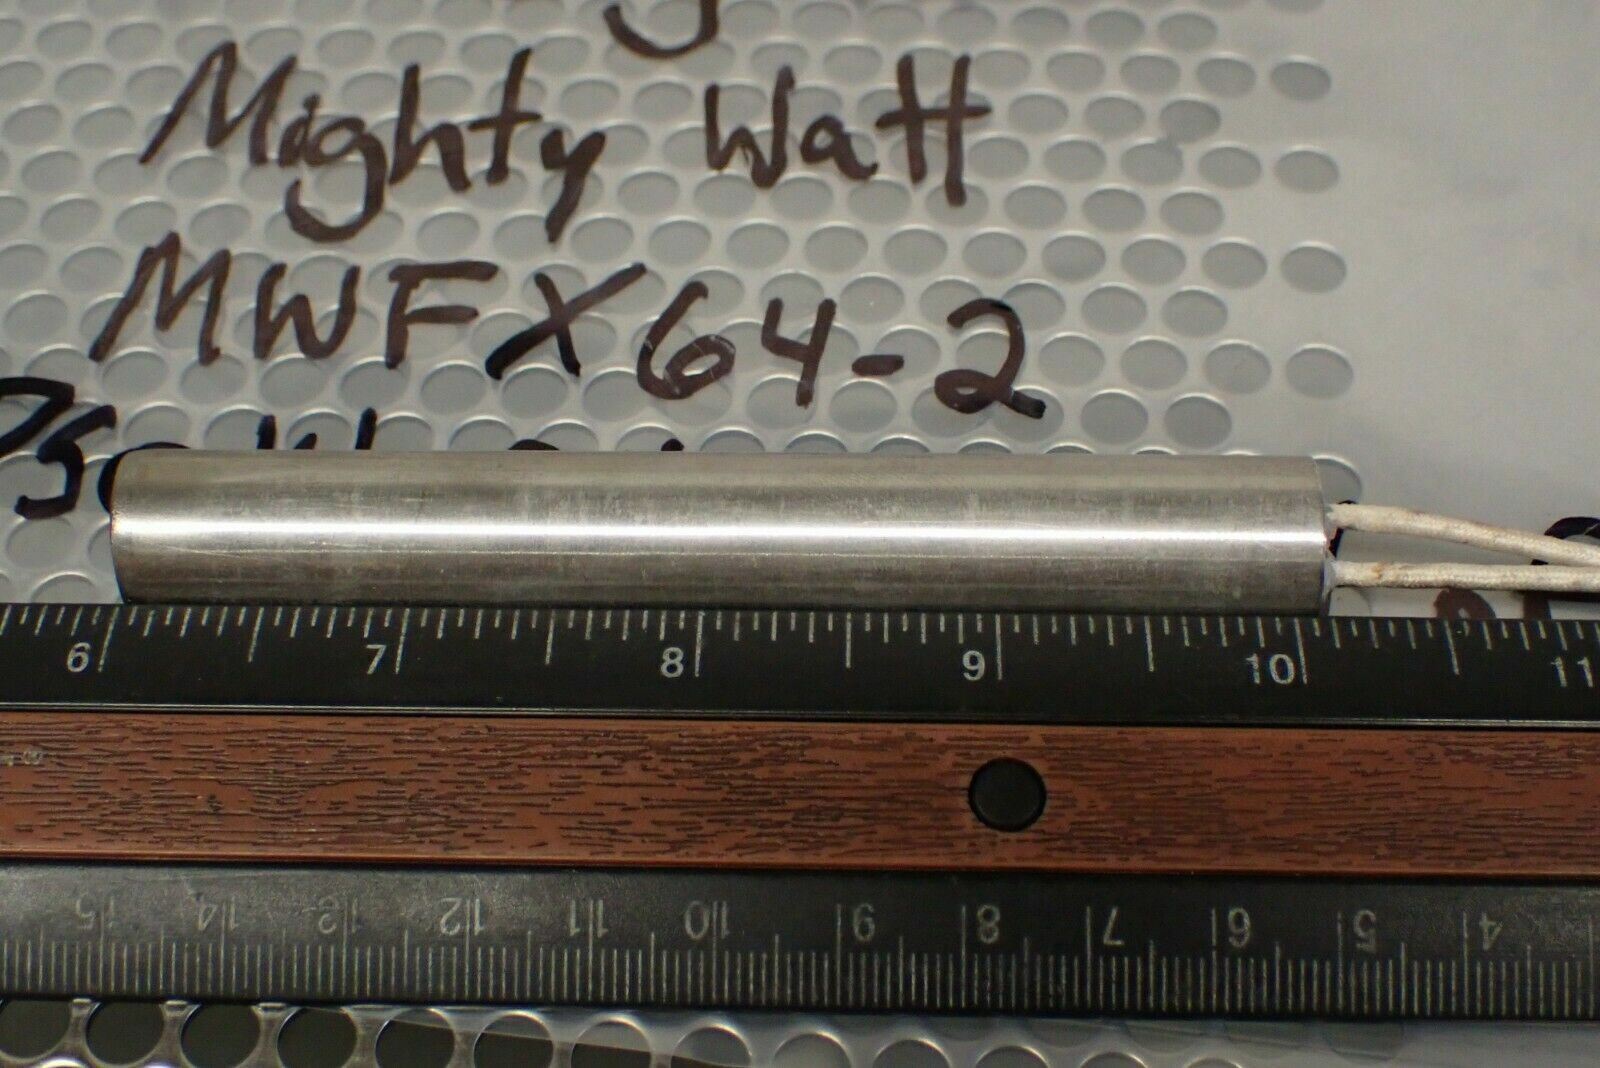 Ogden MWFX64-2 Mighty Watt 750W 240V Heater Cartridges New Old Stock (Lot of 2) Ogden MWFX64-2 - фотография #3